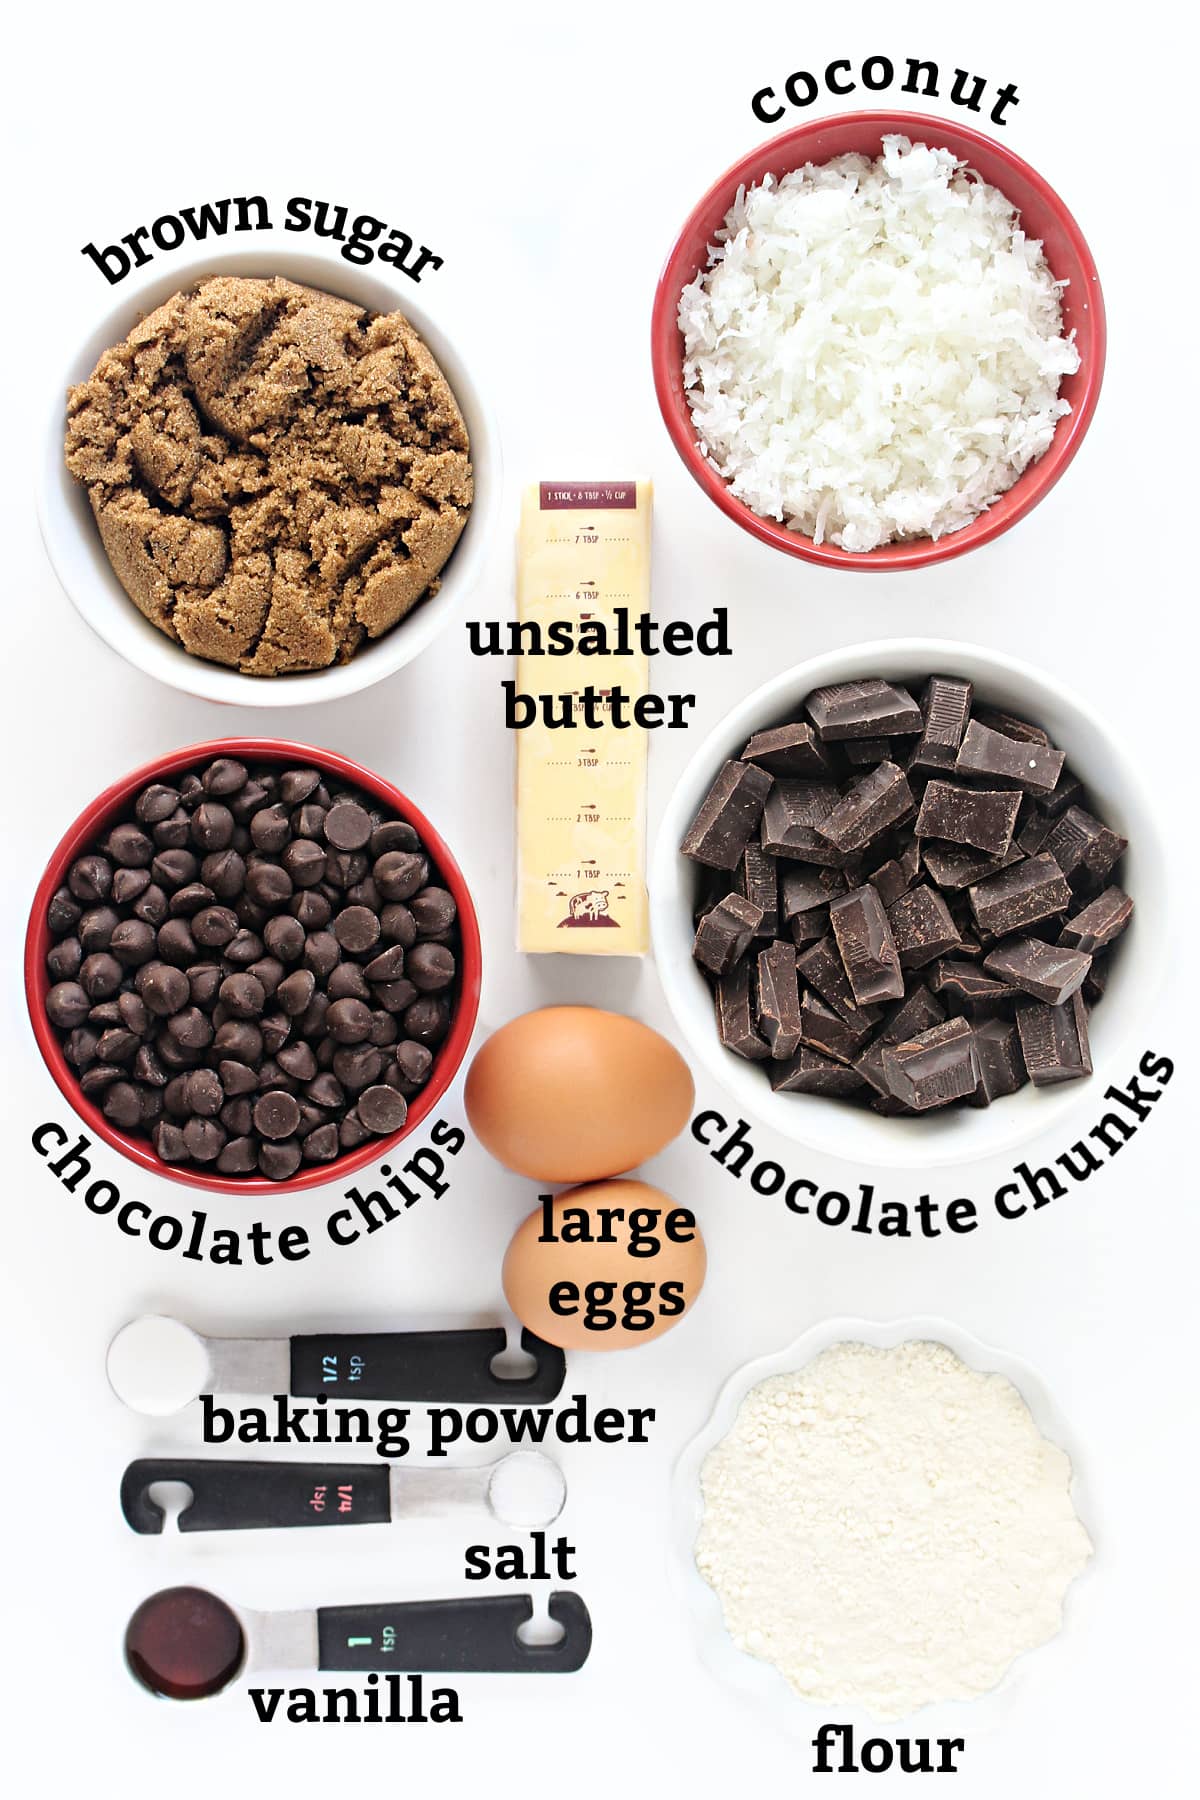 Ingredients: brown sugar, coconut, butter, chocolate chips, chocolate chunks, eggs vanilla, salt, baking powder, flour.